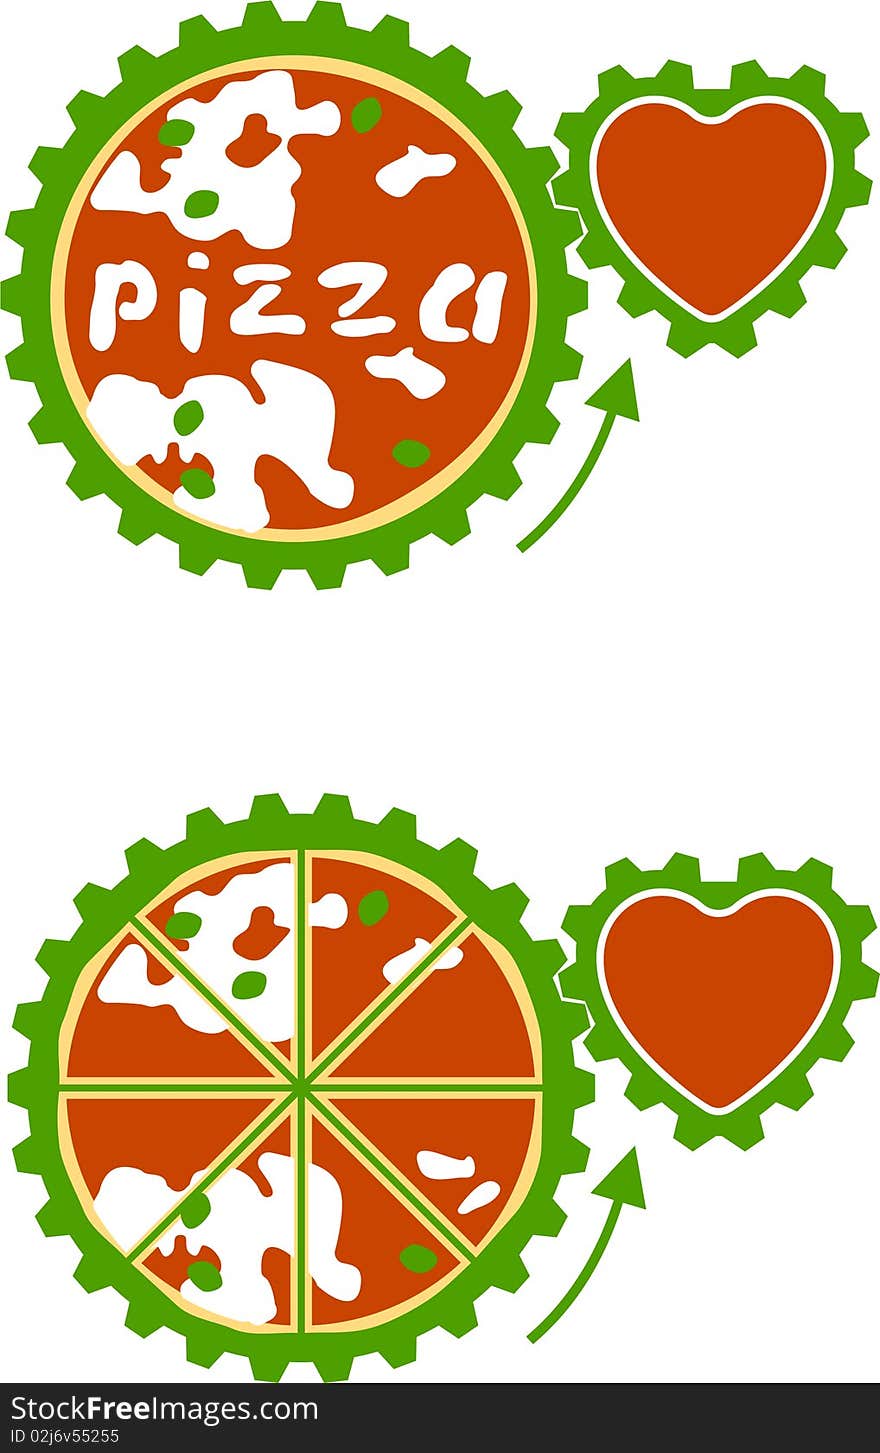 Vector illustration of pizza - vital energy. Vector illustration of pizza - vital energy